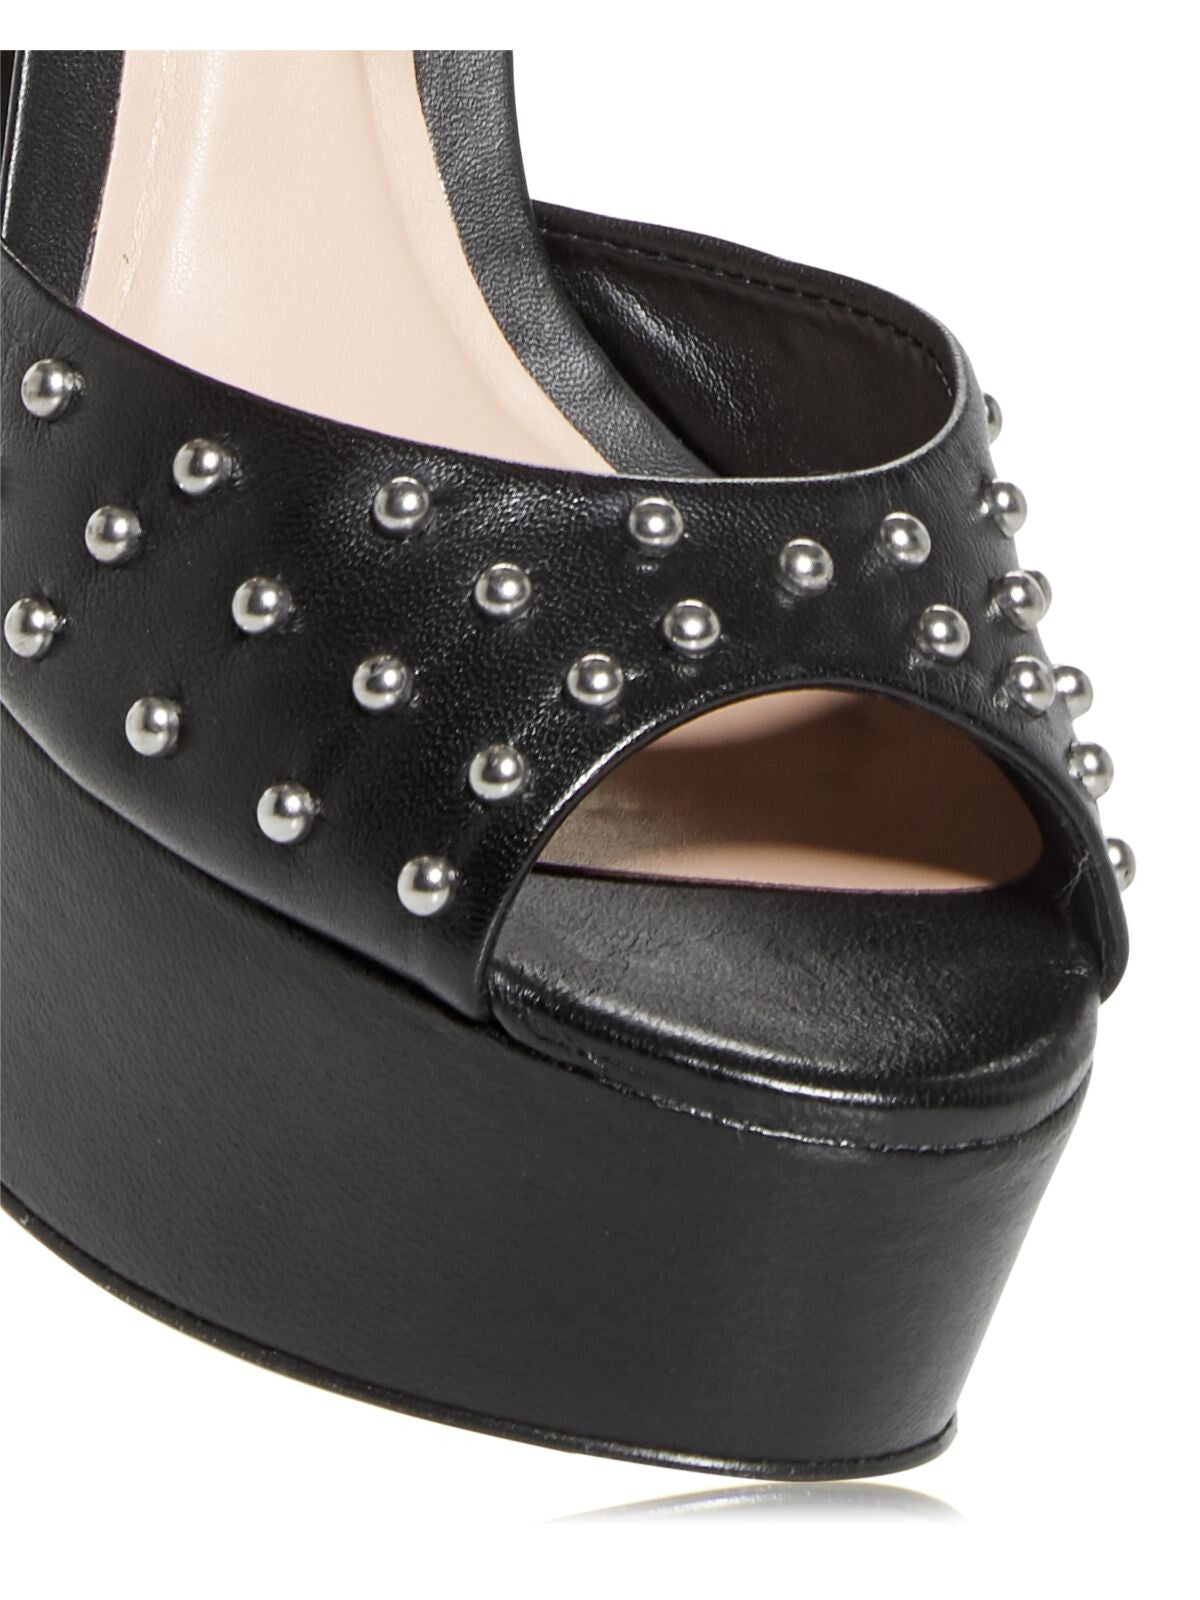 AQUA Womens Black 1-1/2" Platform Ankle Strap Studded Cullen Round Toe Block Heel Buckle Leather Dress Sandals Shoes B